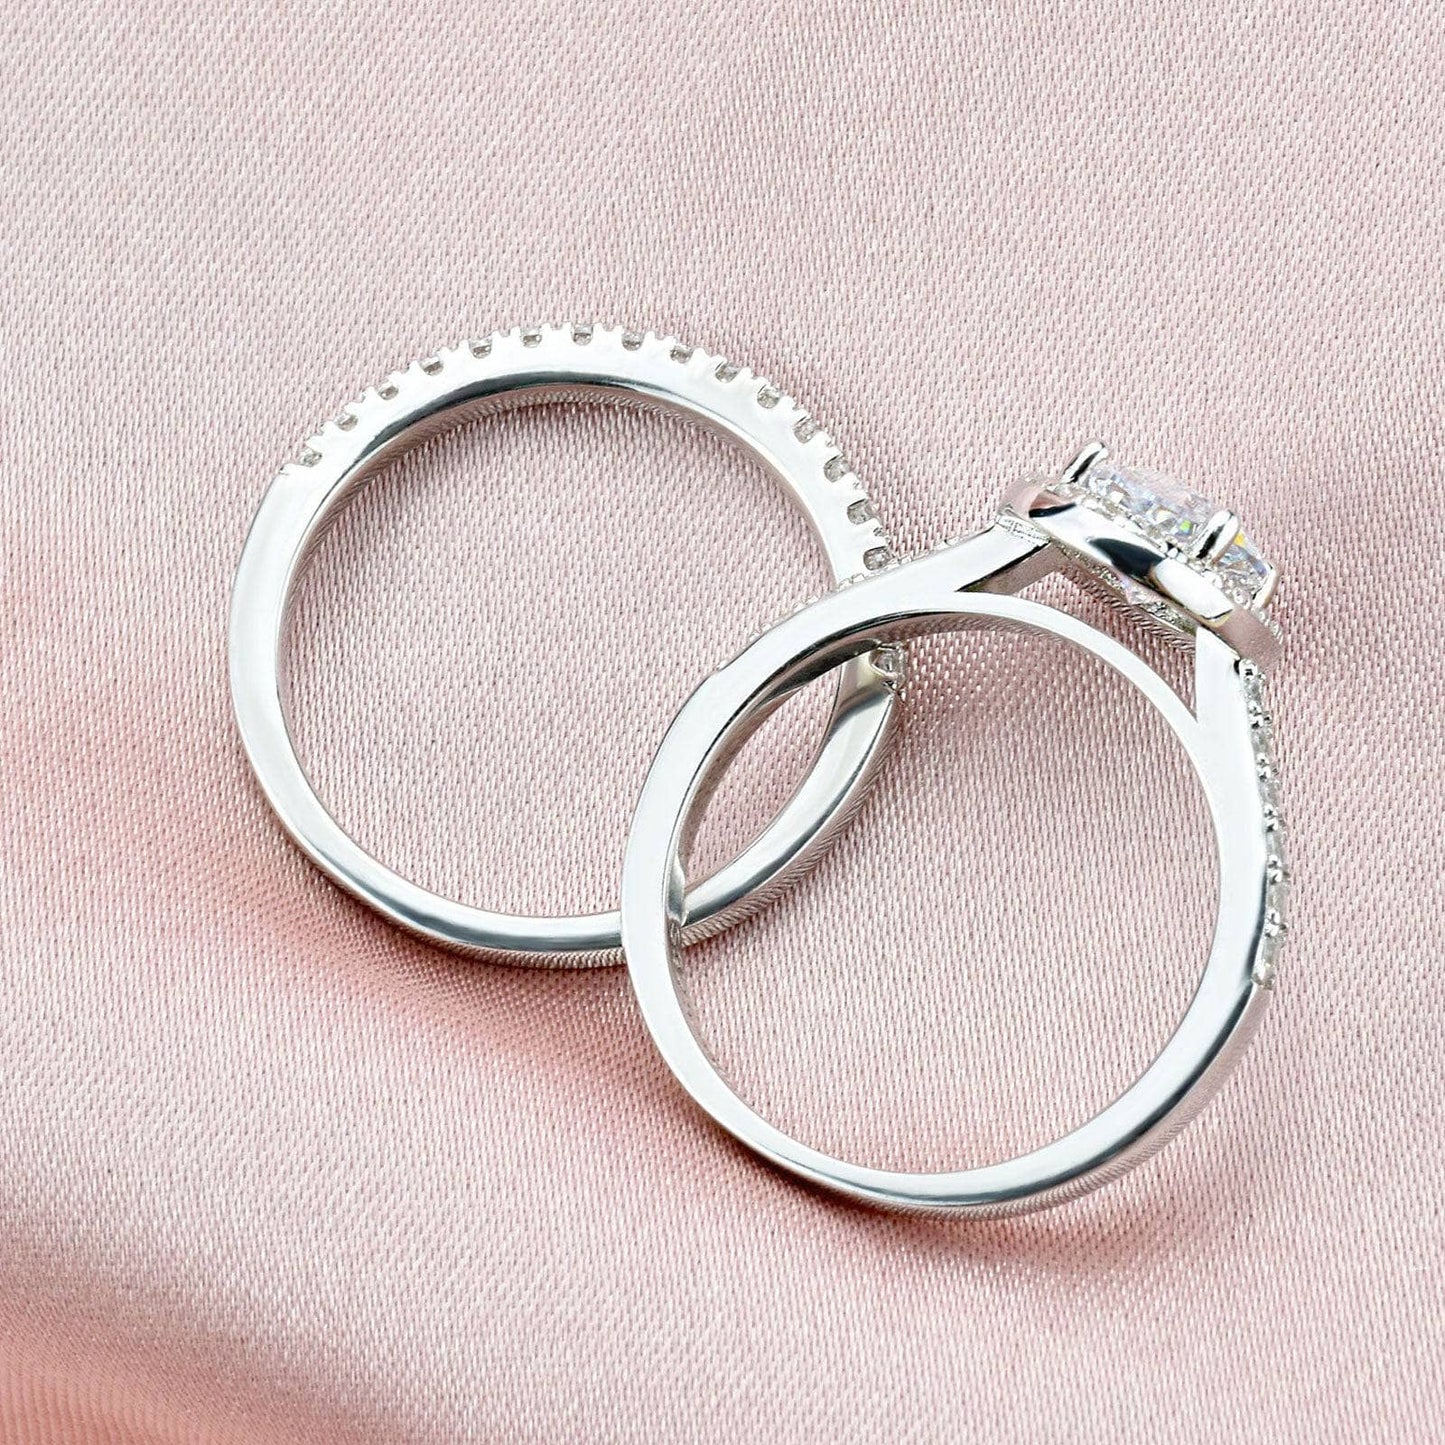 Halo Oval Cut Engagement Ring-Black Diamonds New York